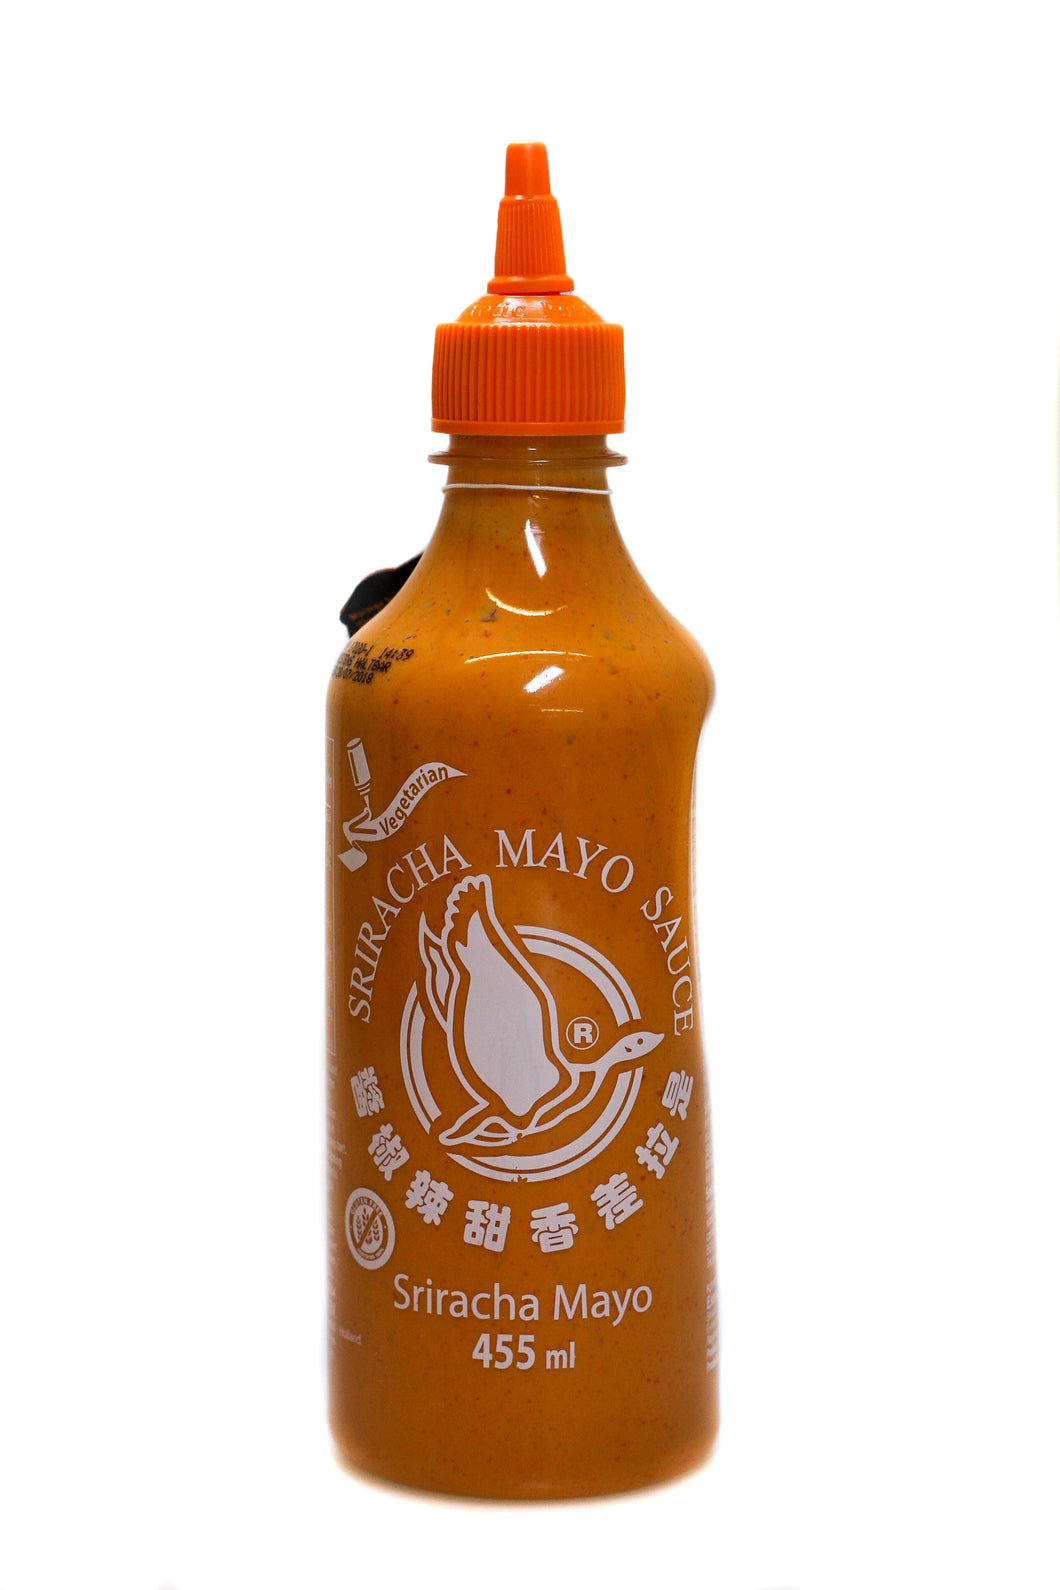 Flying Goose Sriracha Mayo Chili Creme